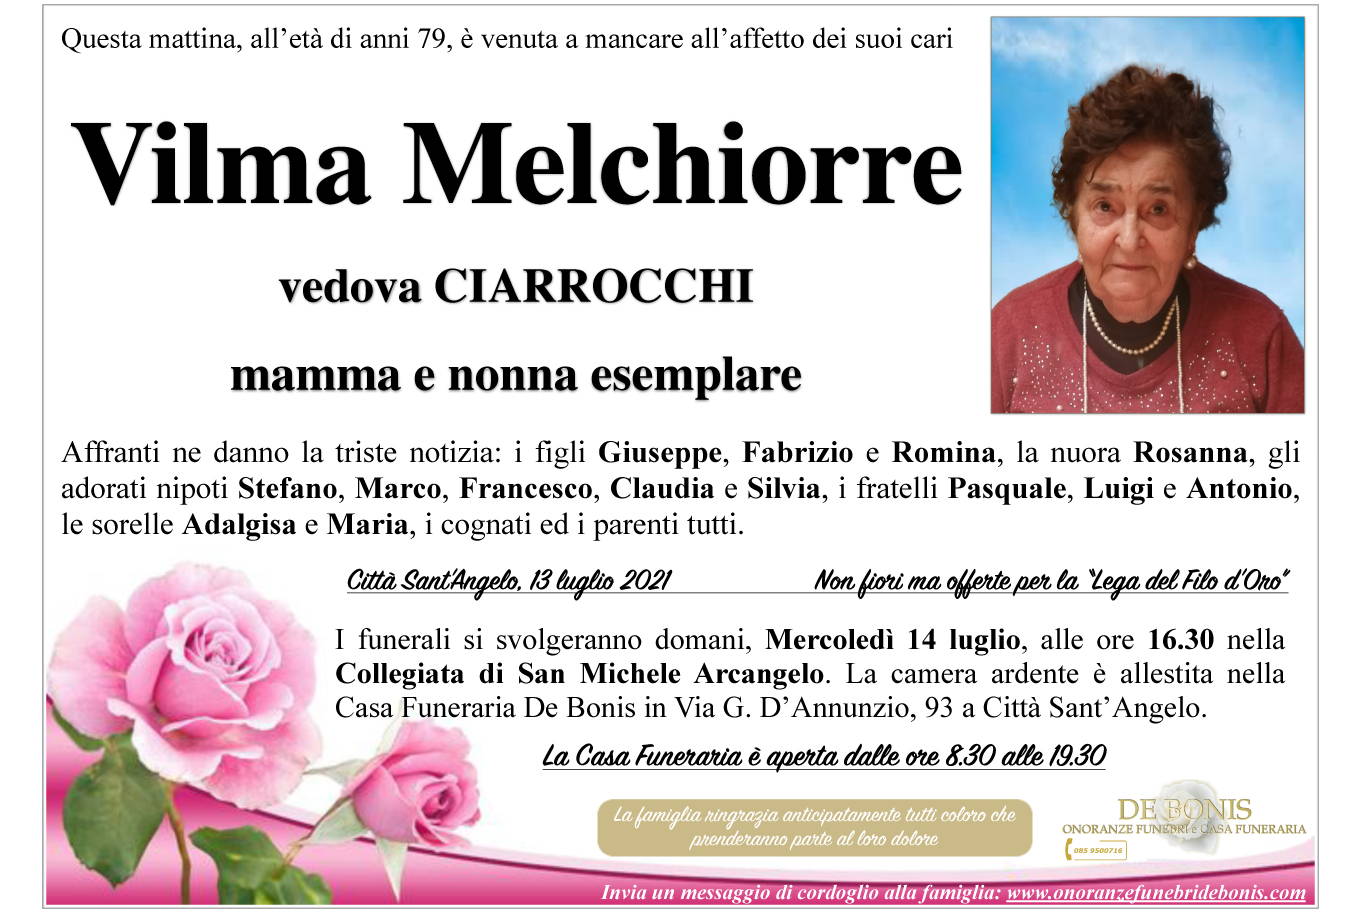 Vilma Melchiorre